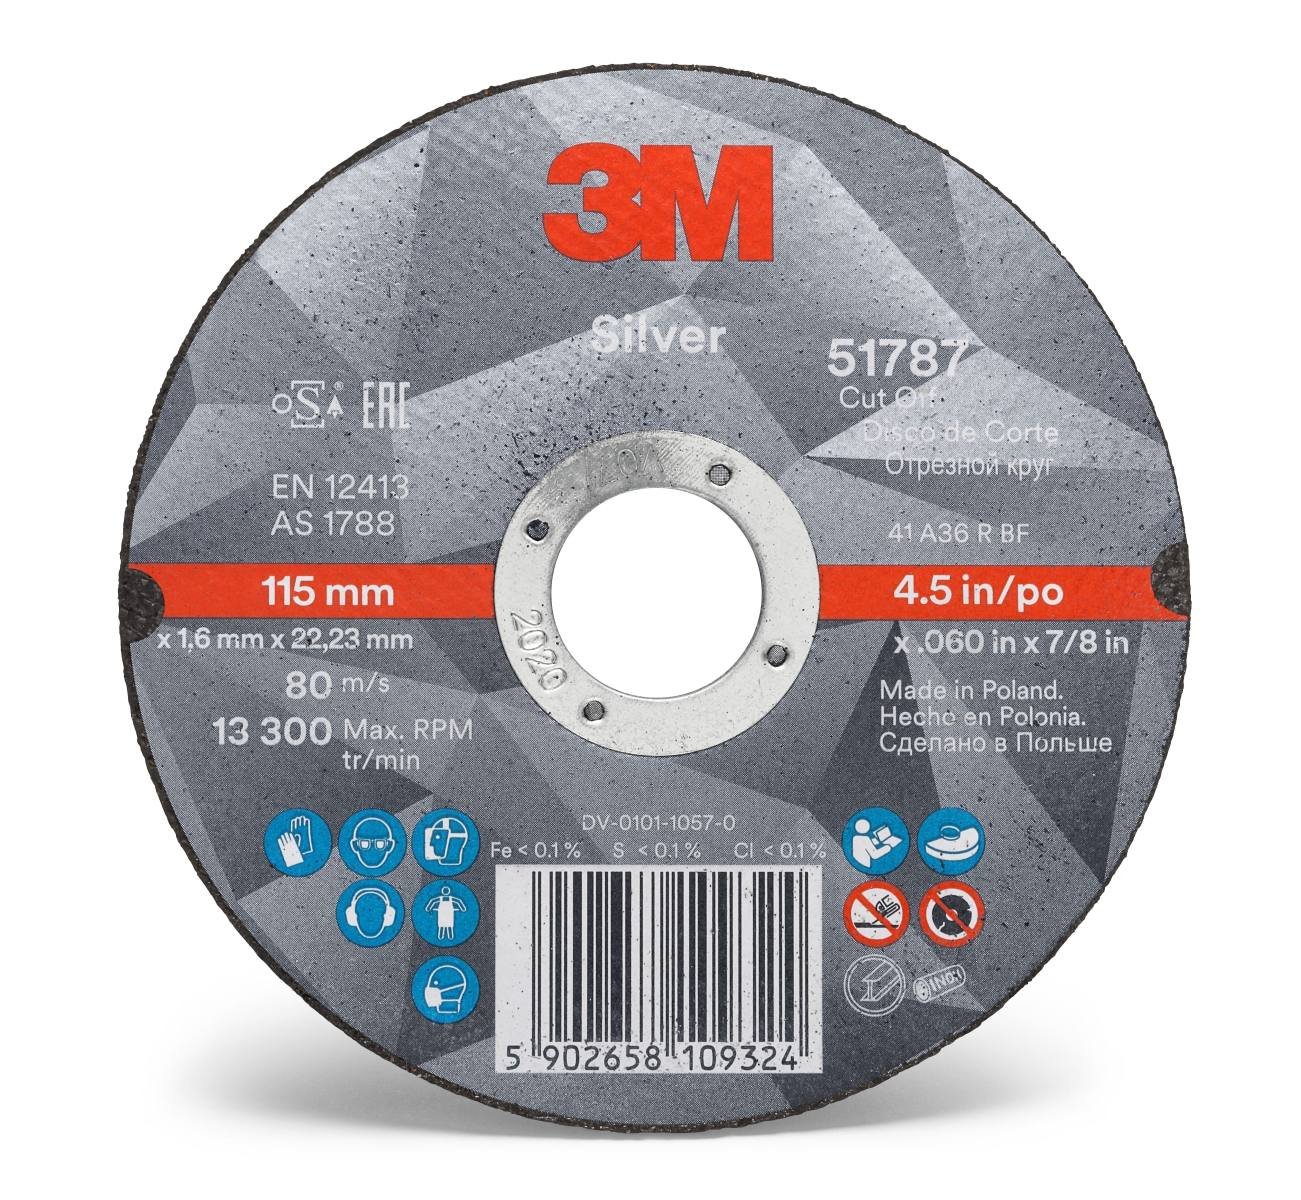 3M Silver Cut-Off Wheel cutting disc, 180 mm, 3.0 mm, 22.23 mm, T41, 51803